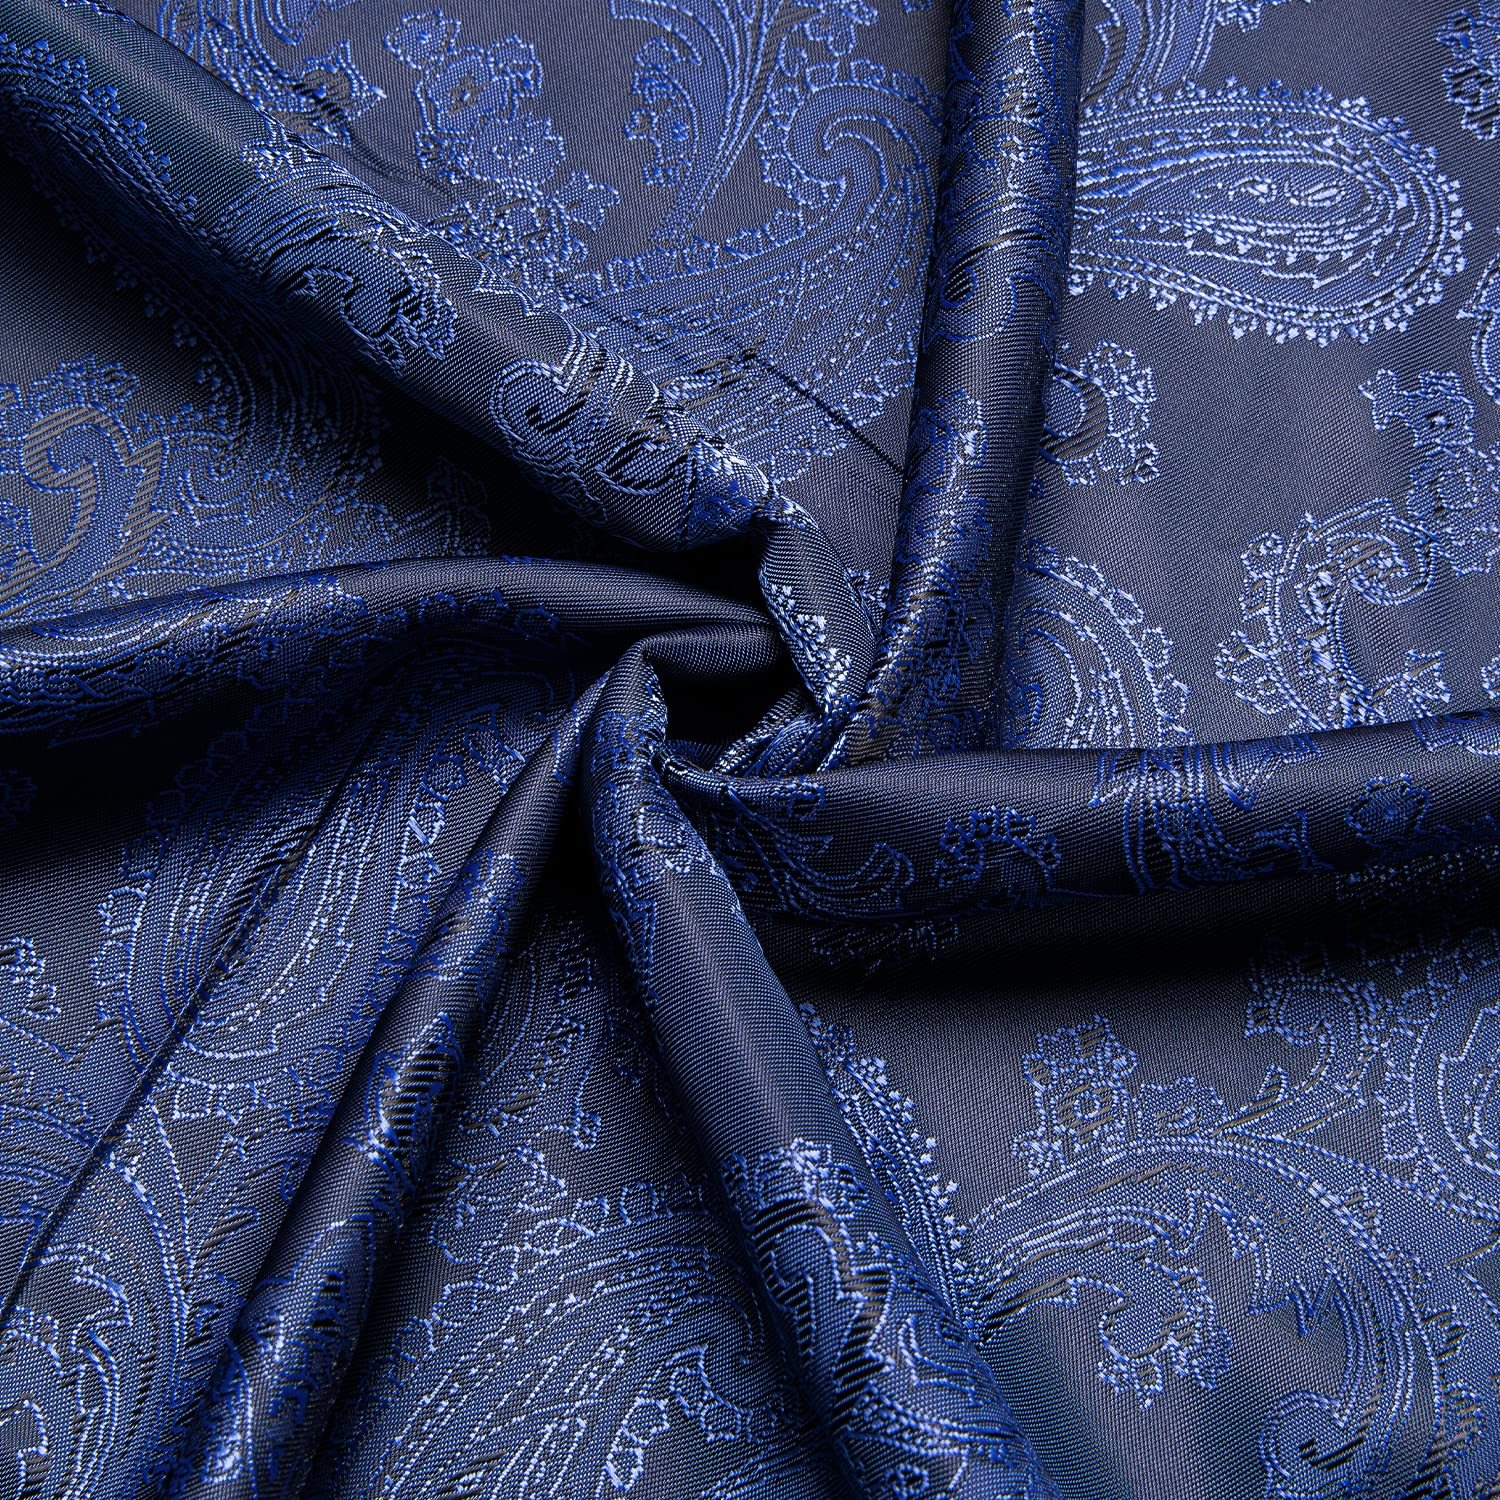 Dark Blue Paisley Silk Men's Short Sleeve Shirt